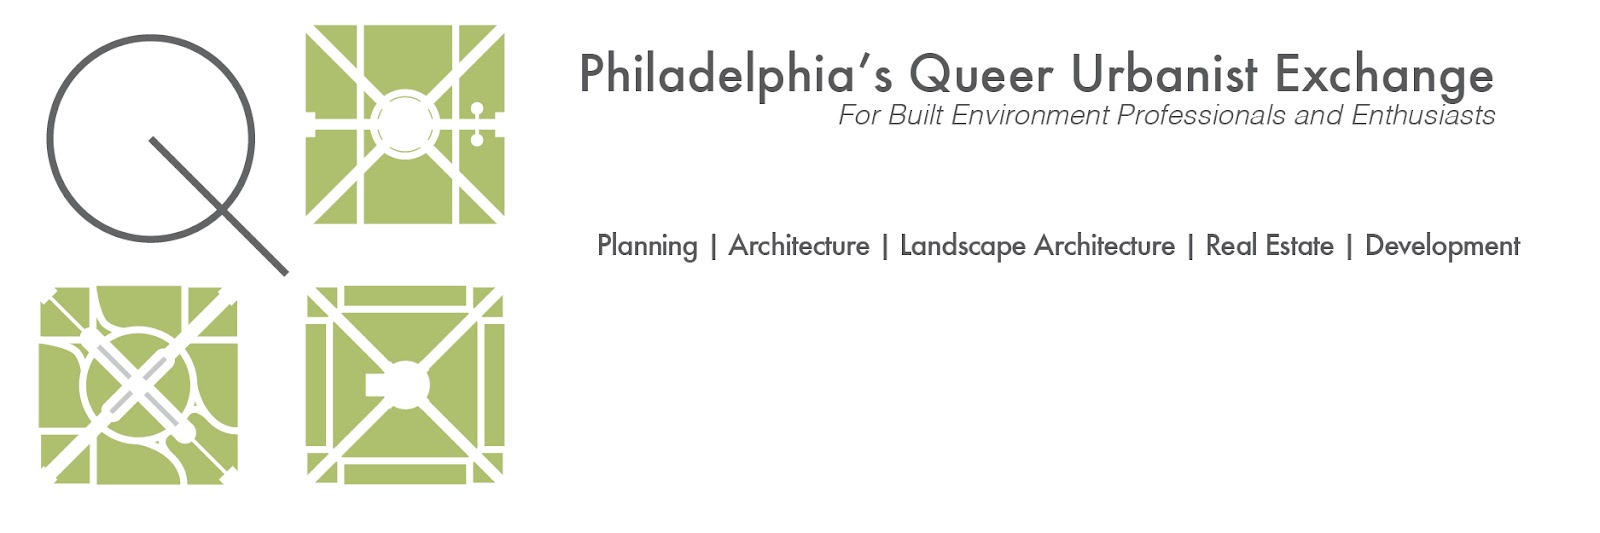 Philadelphia's Queer Urbanist Exchange